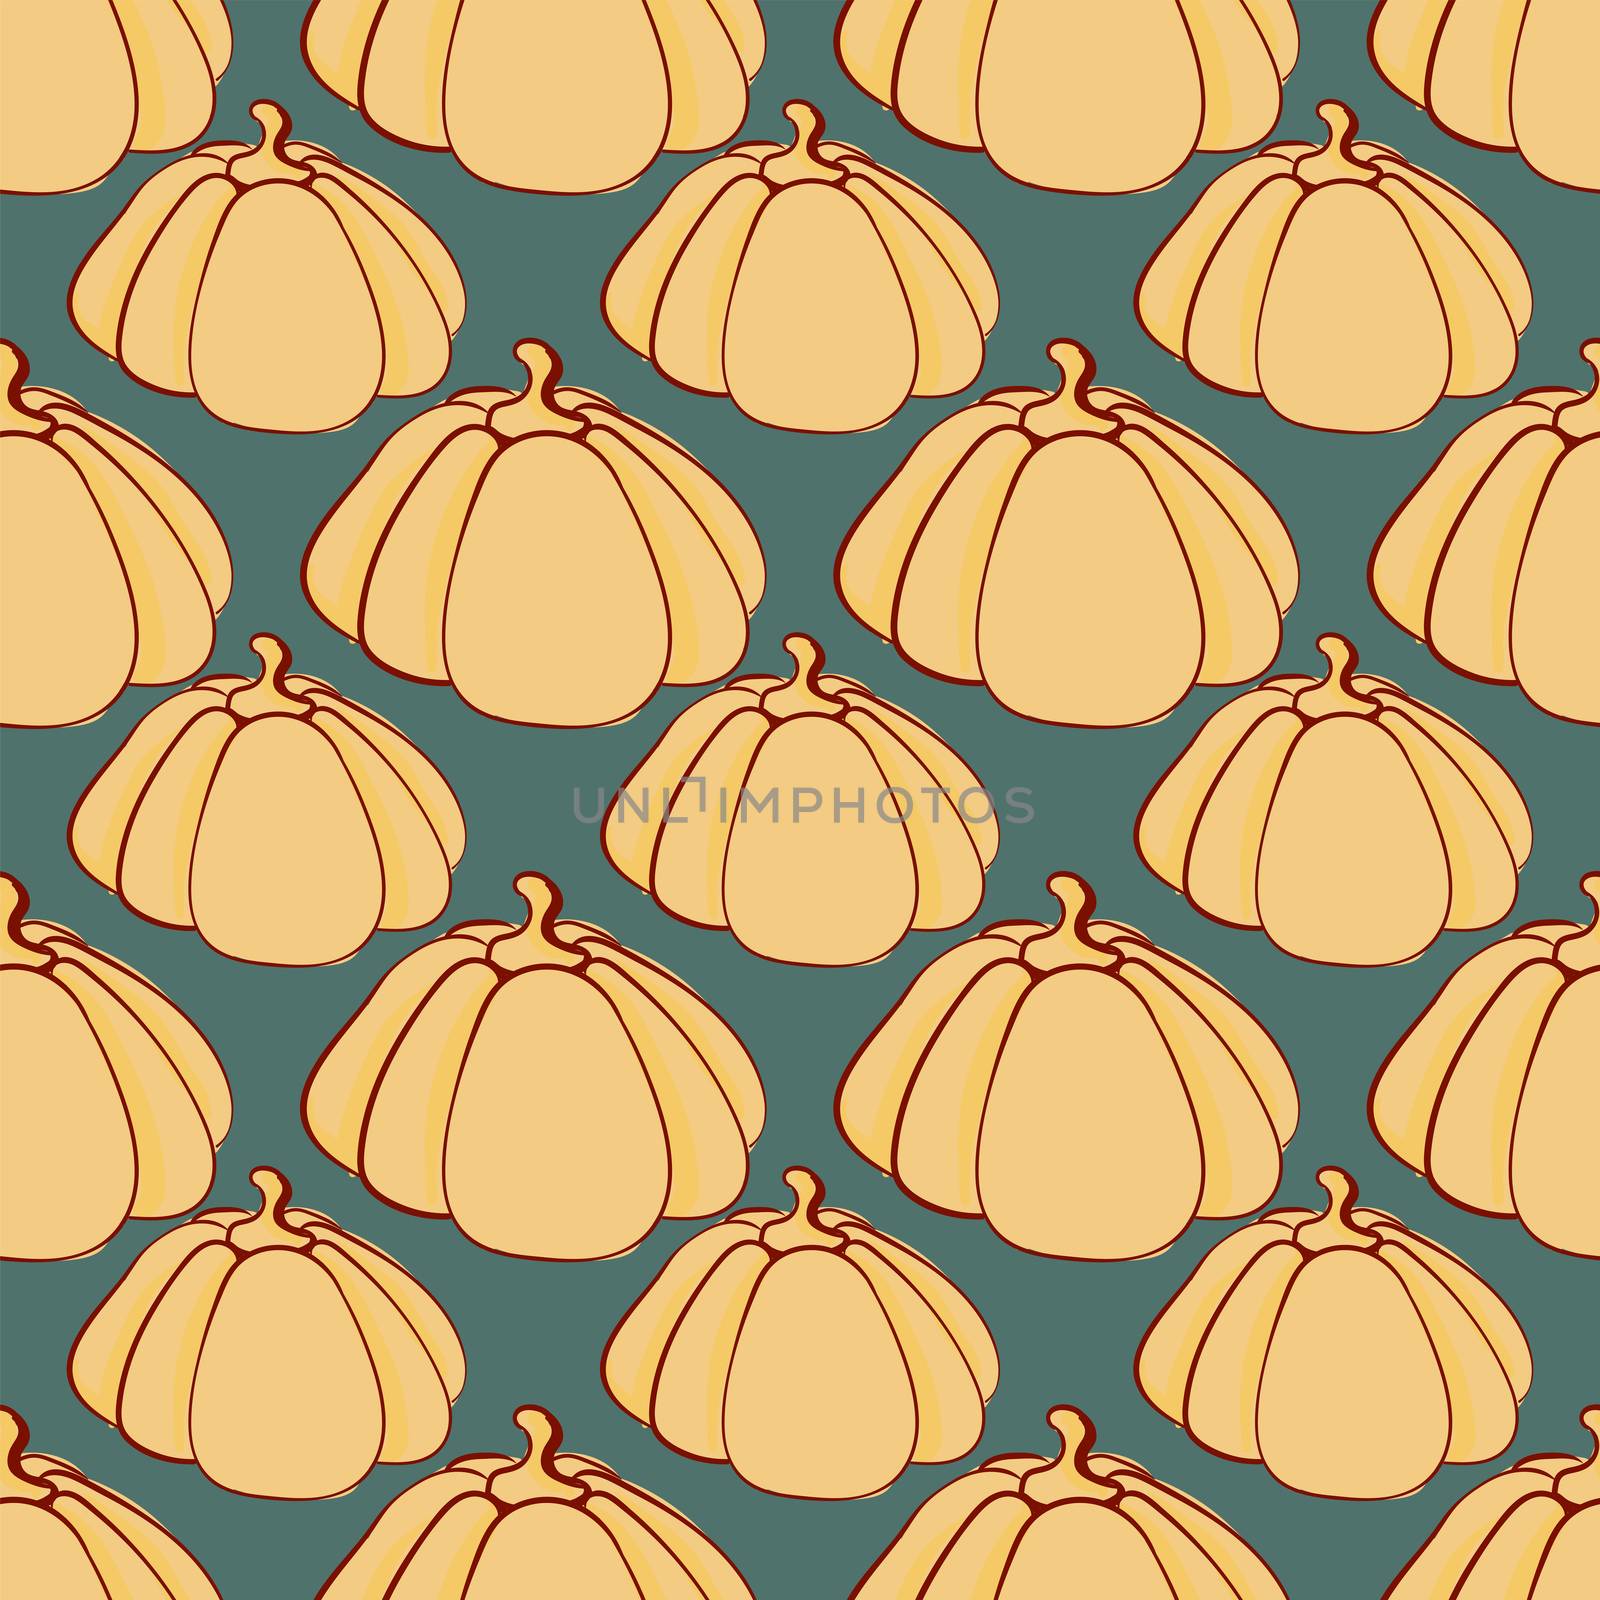 Pumpkins pattern , illustration, vector on white background